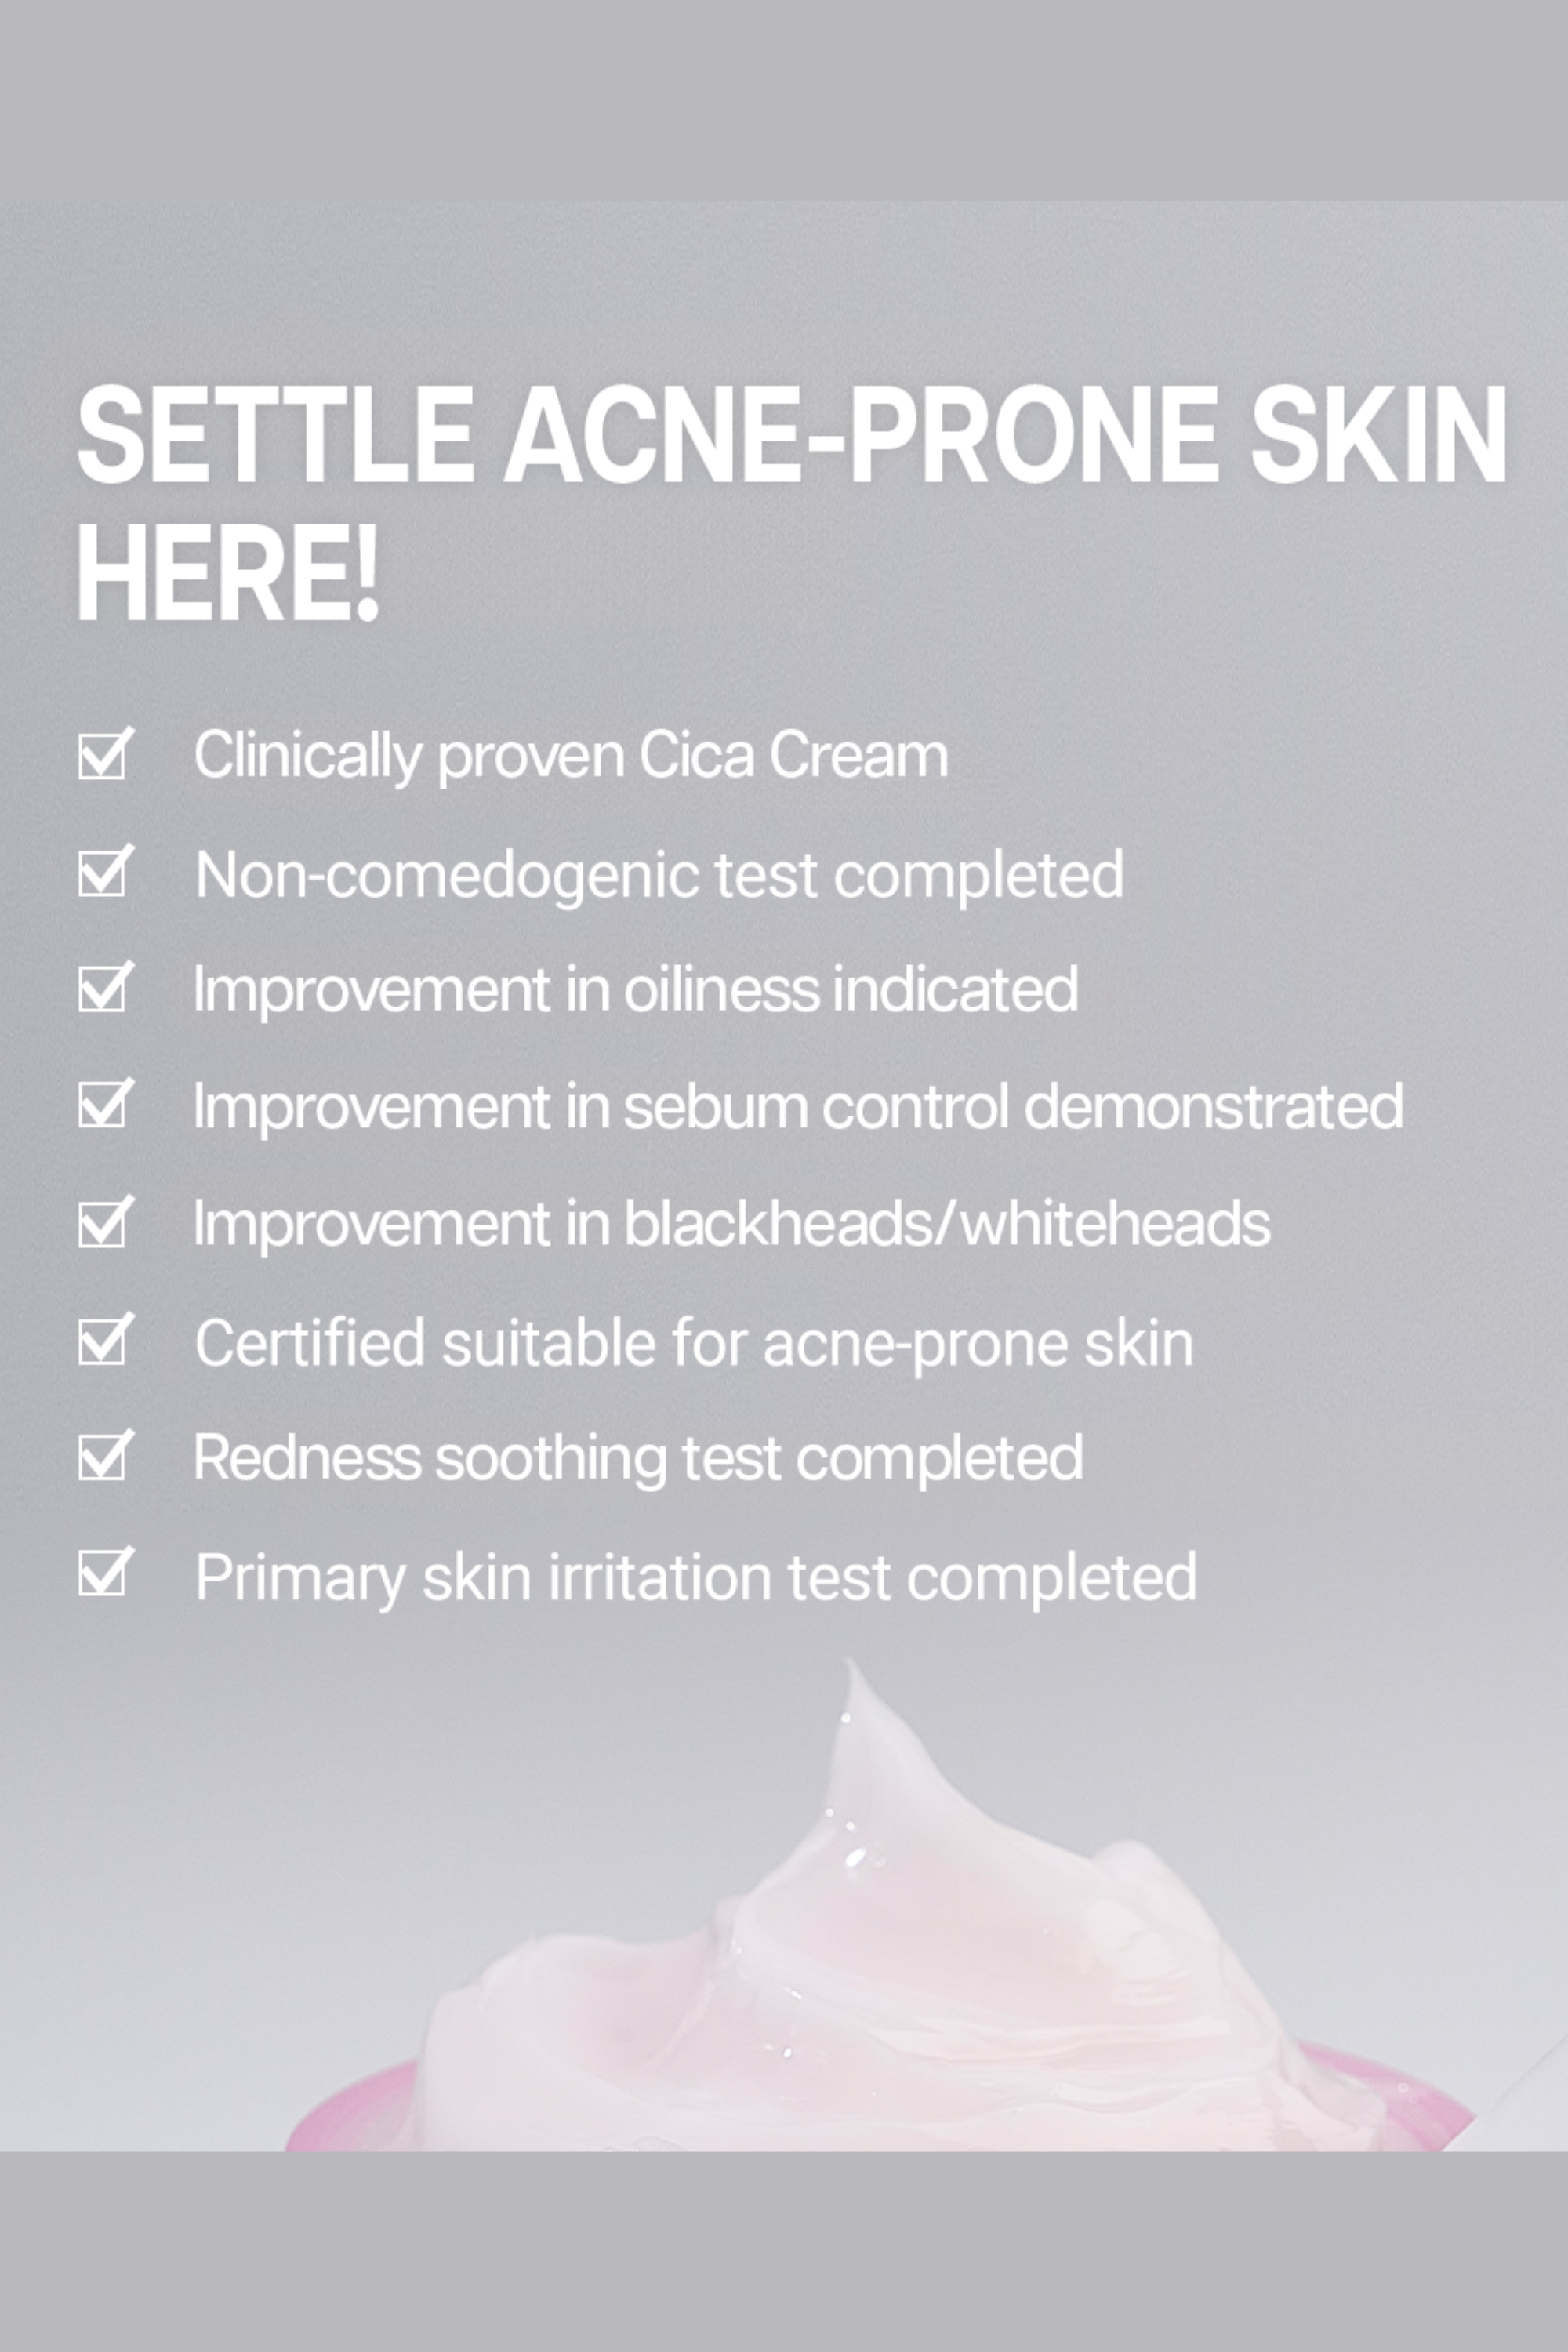 Cica Care Cream & Dr. Mask Cica Set ($53 Value) - Rovectin Skin Essentials